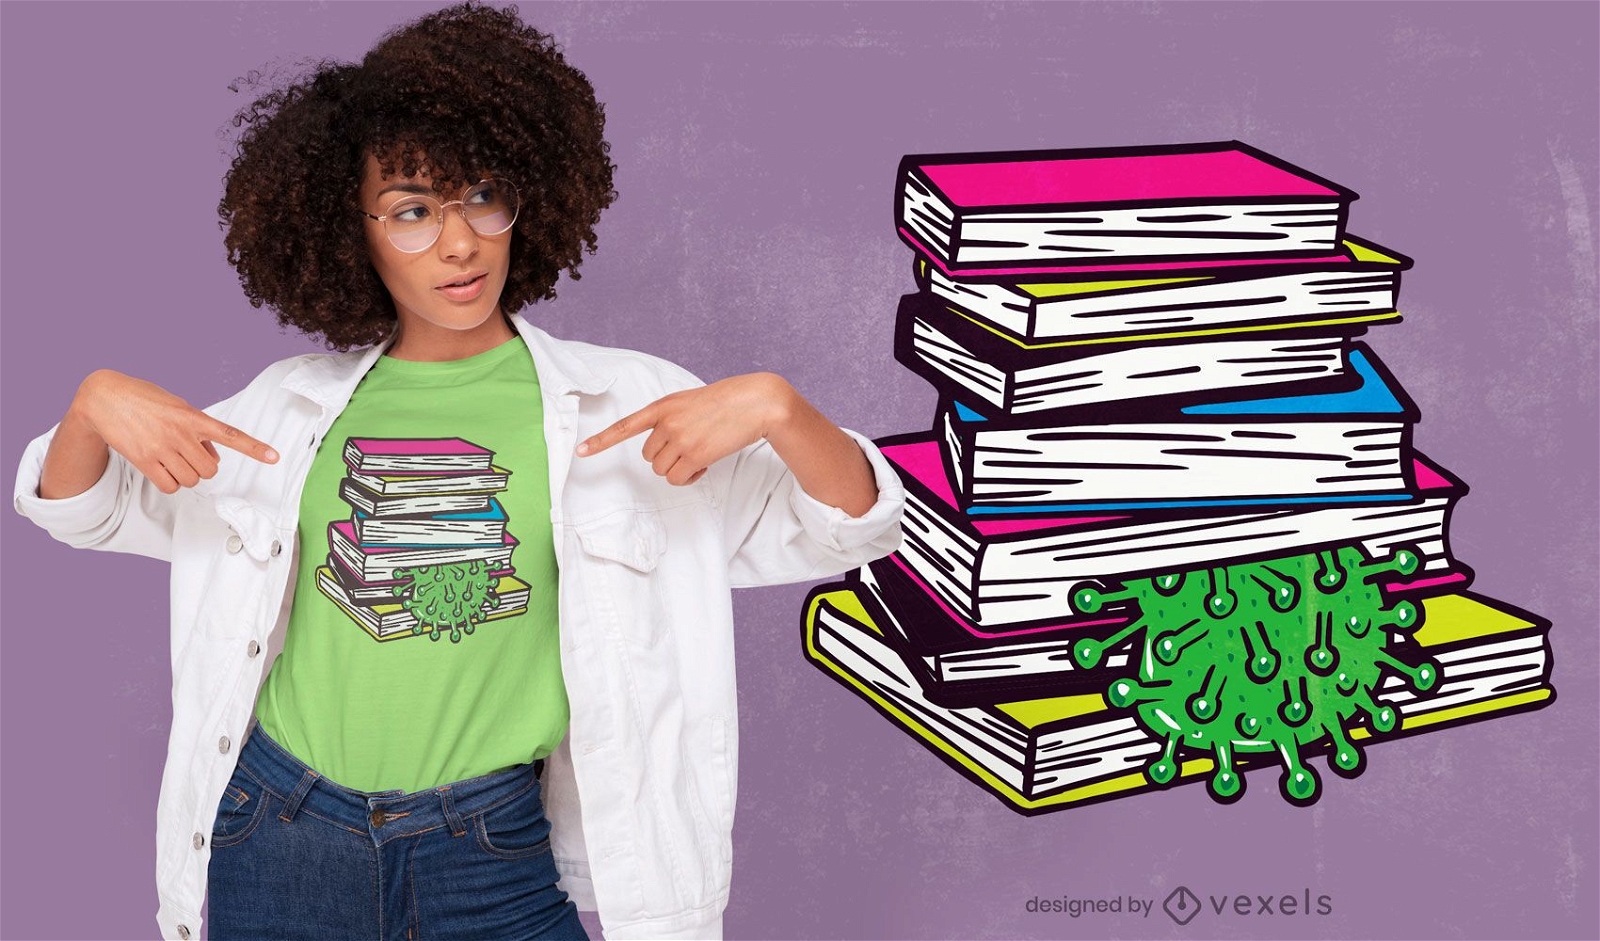 Coronavírus esmagado pelo design de camisetas de livros